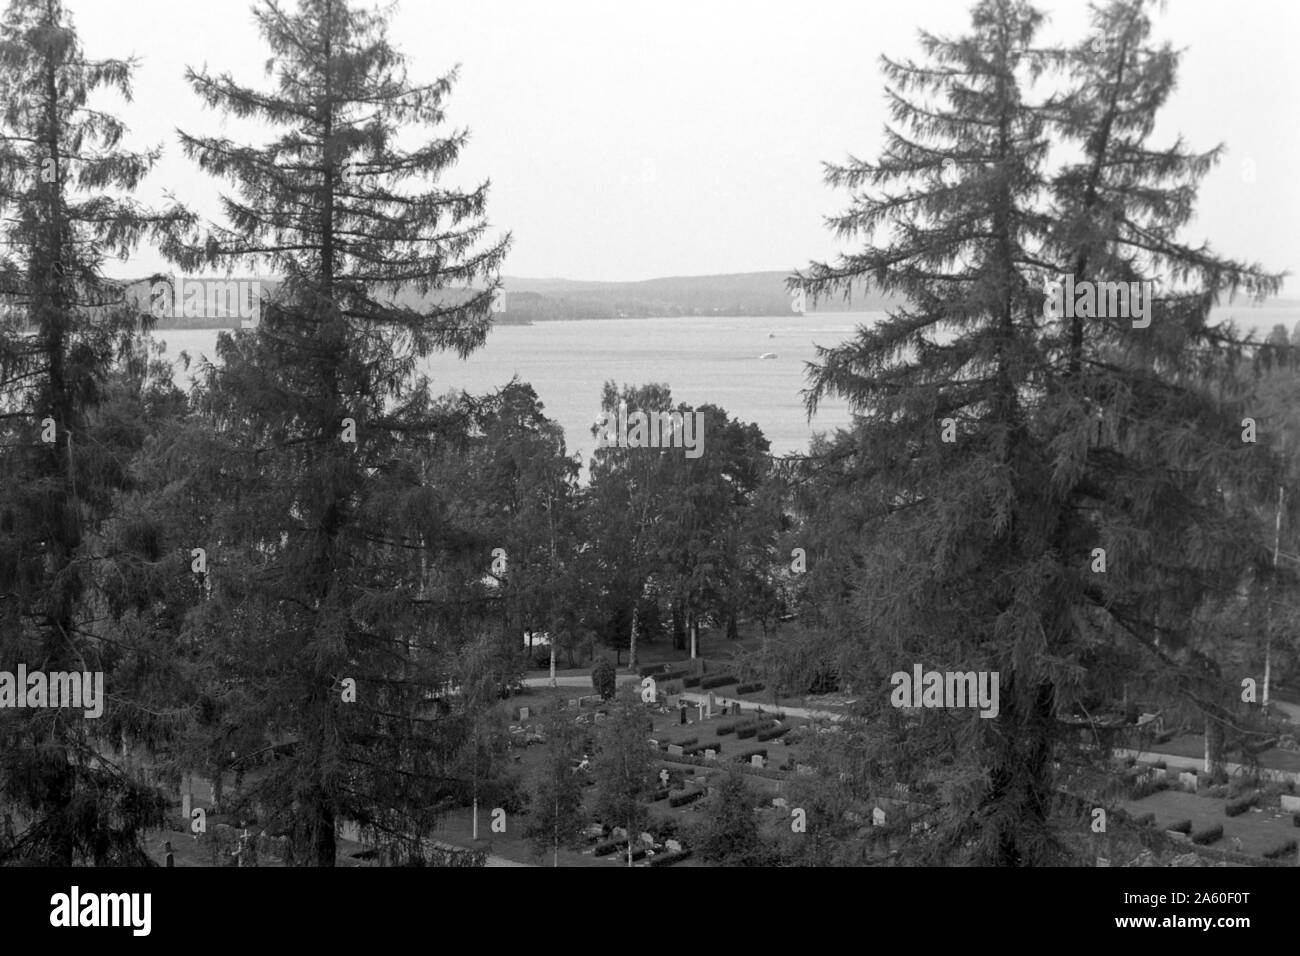 Siljansee, dalarna, Suède, 1969. Le lac Siljan, dalarna, Suède, 1969. Banque D'Images